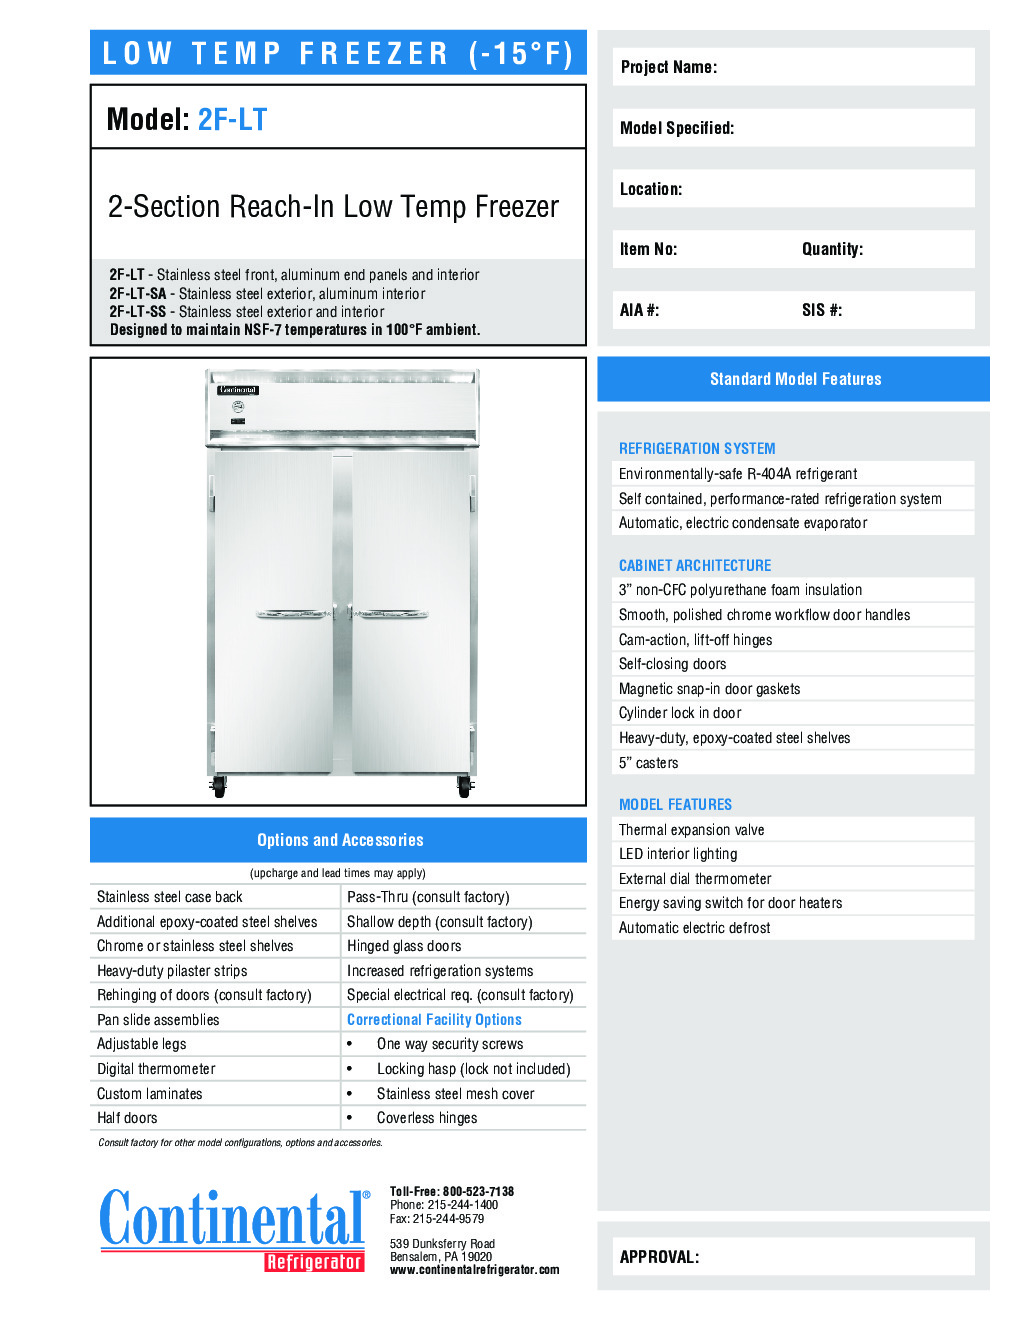 Continental Refrigerator 2F-LT Reach-In Low Temperature Freezer